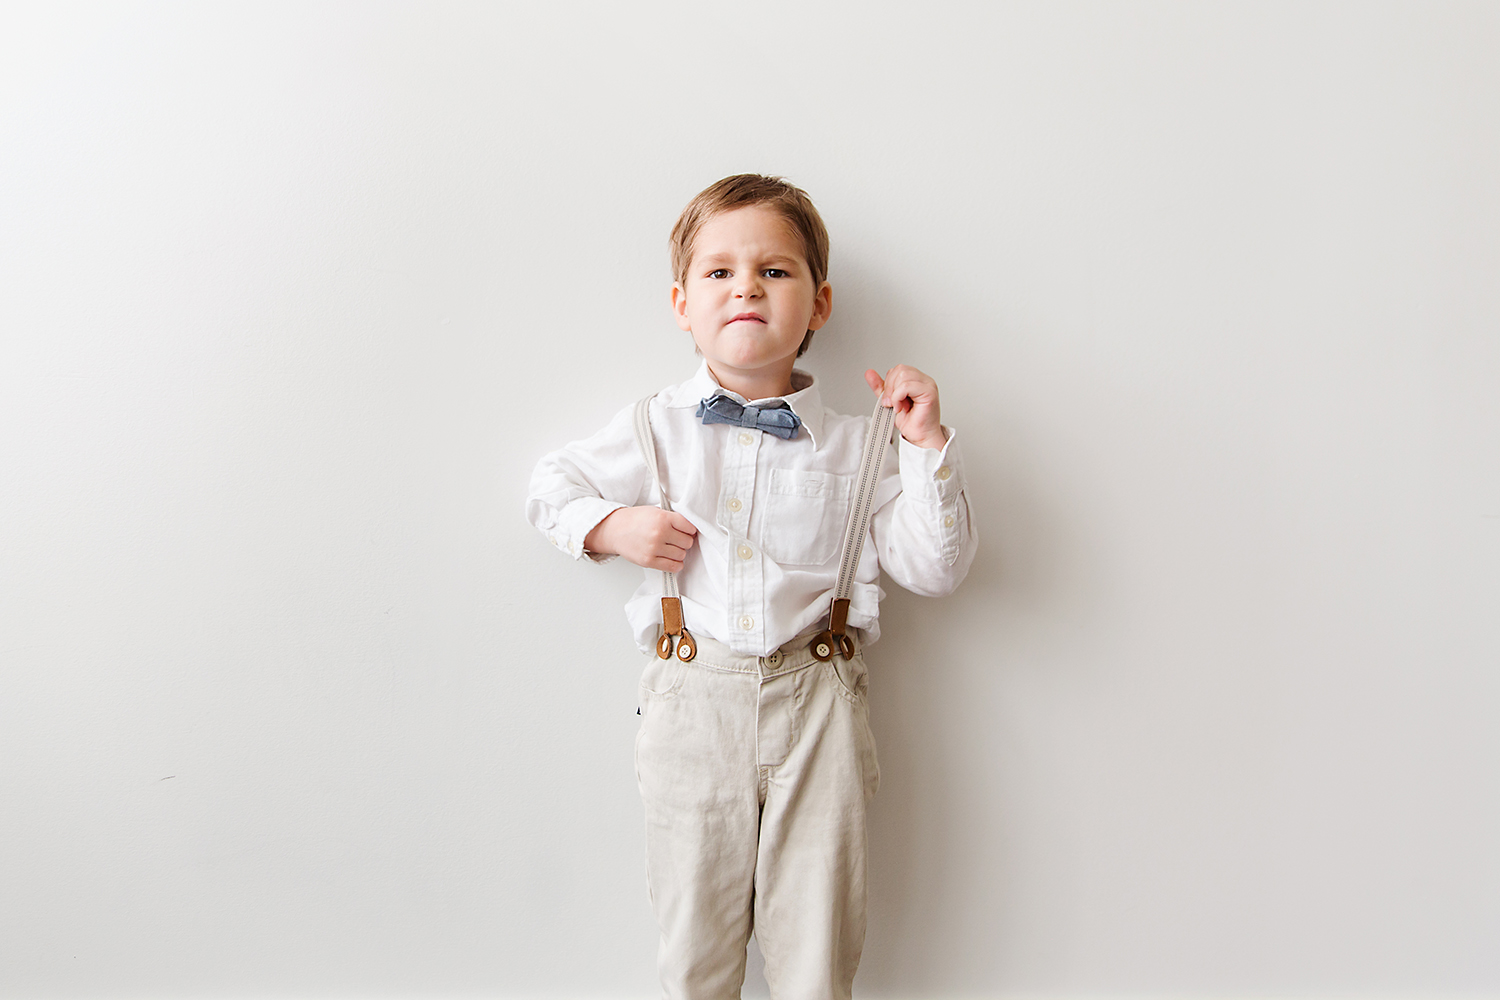 Studio portrait of a grumpy boy in suspenders and a bow tie